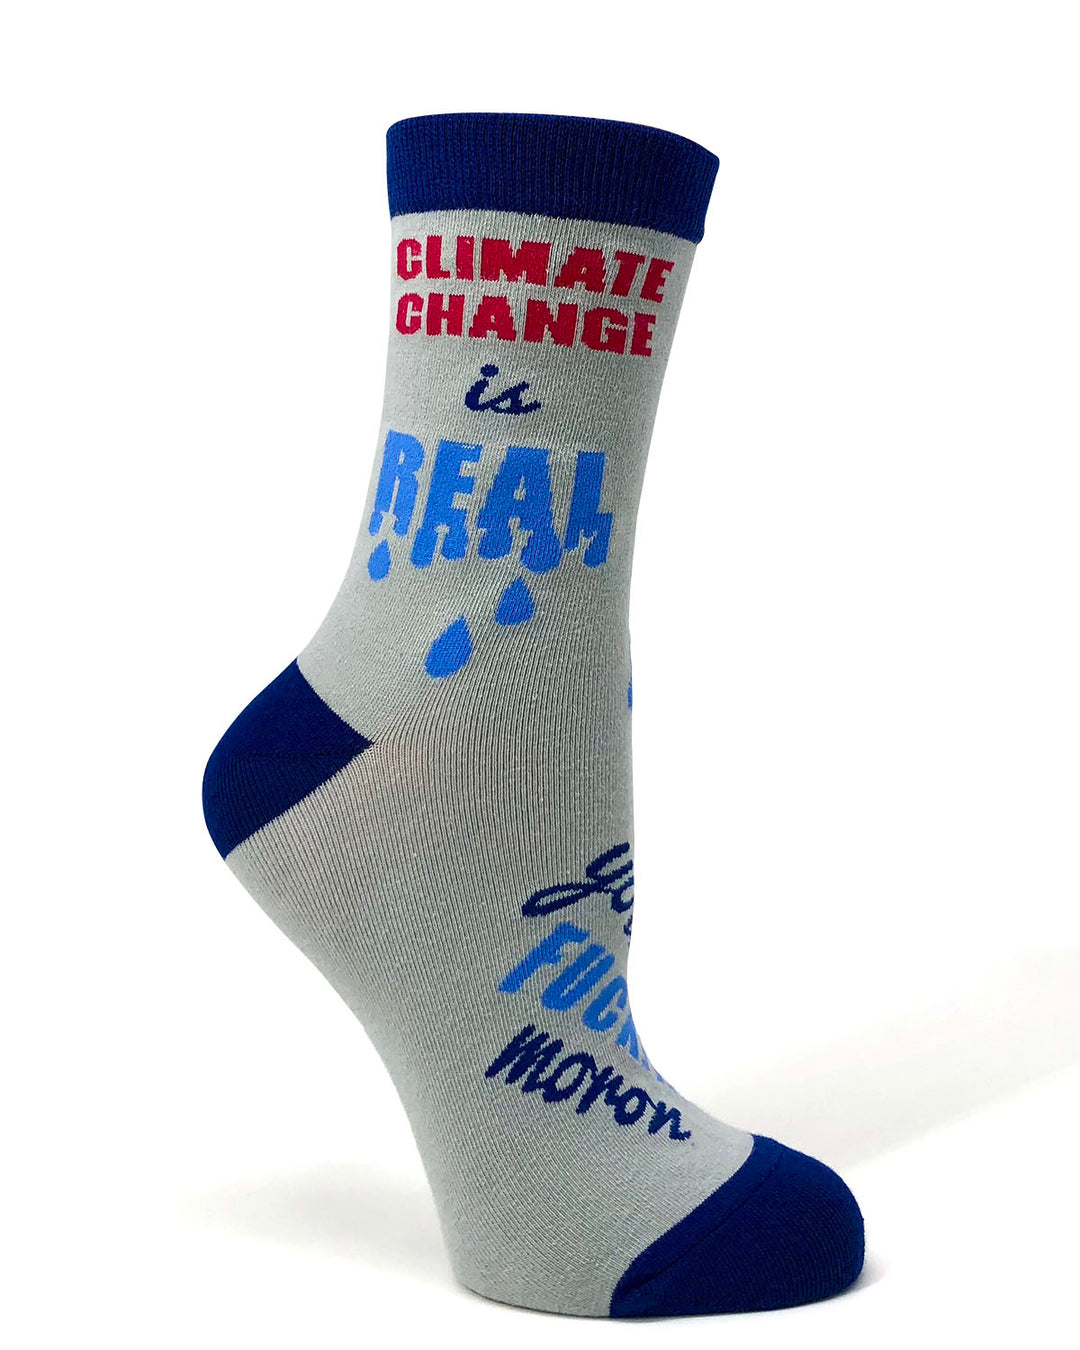 Climate Change is Real Ladies' Crew Socks